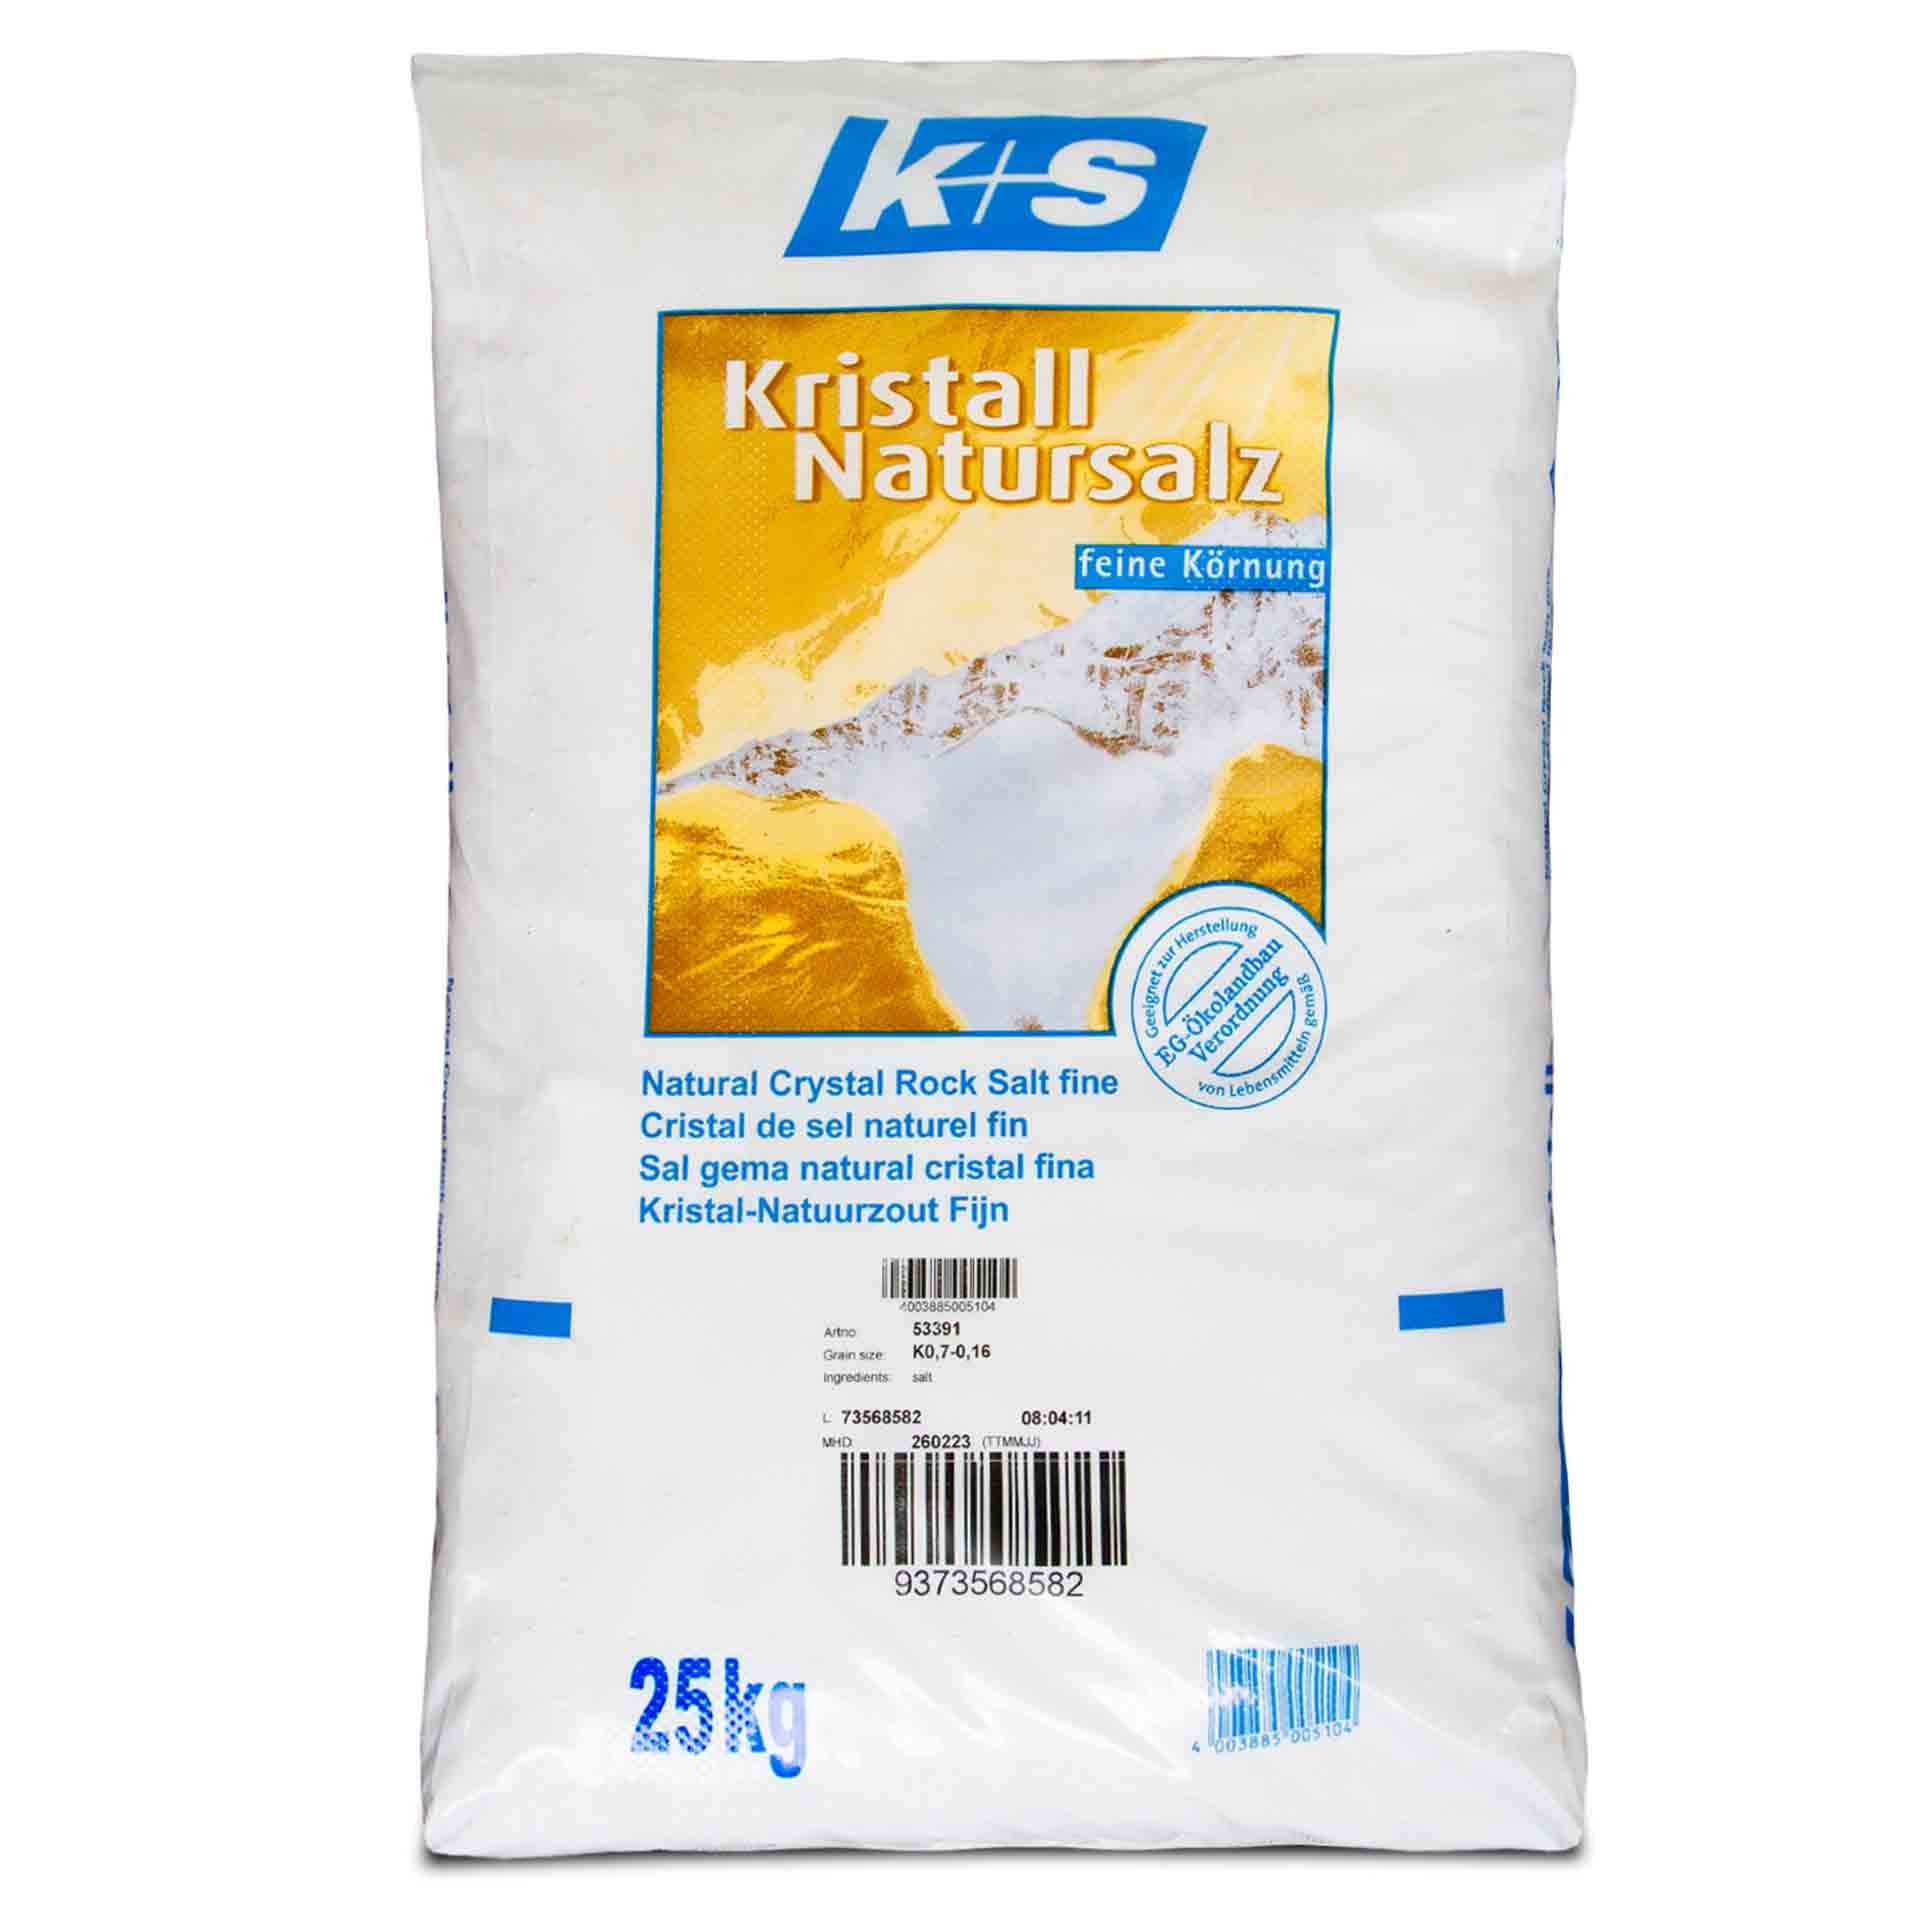 K+S 25 kg Speisesalz Steinsalz Kristall Natursalz